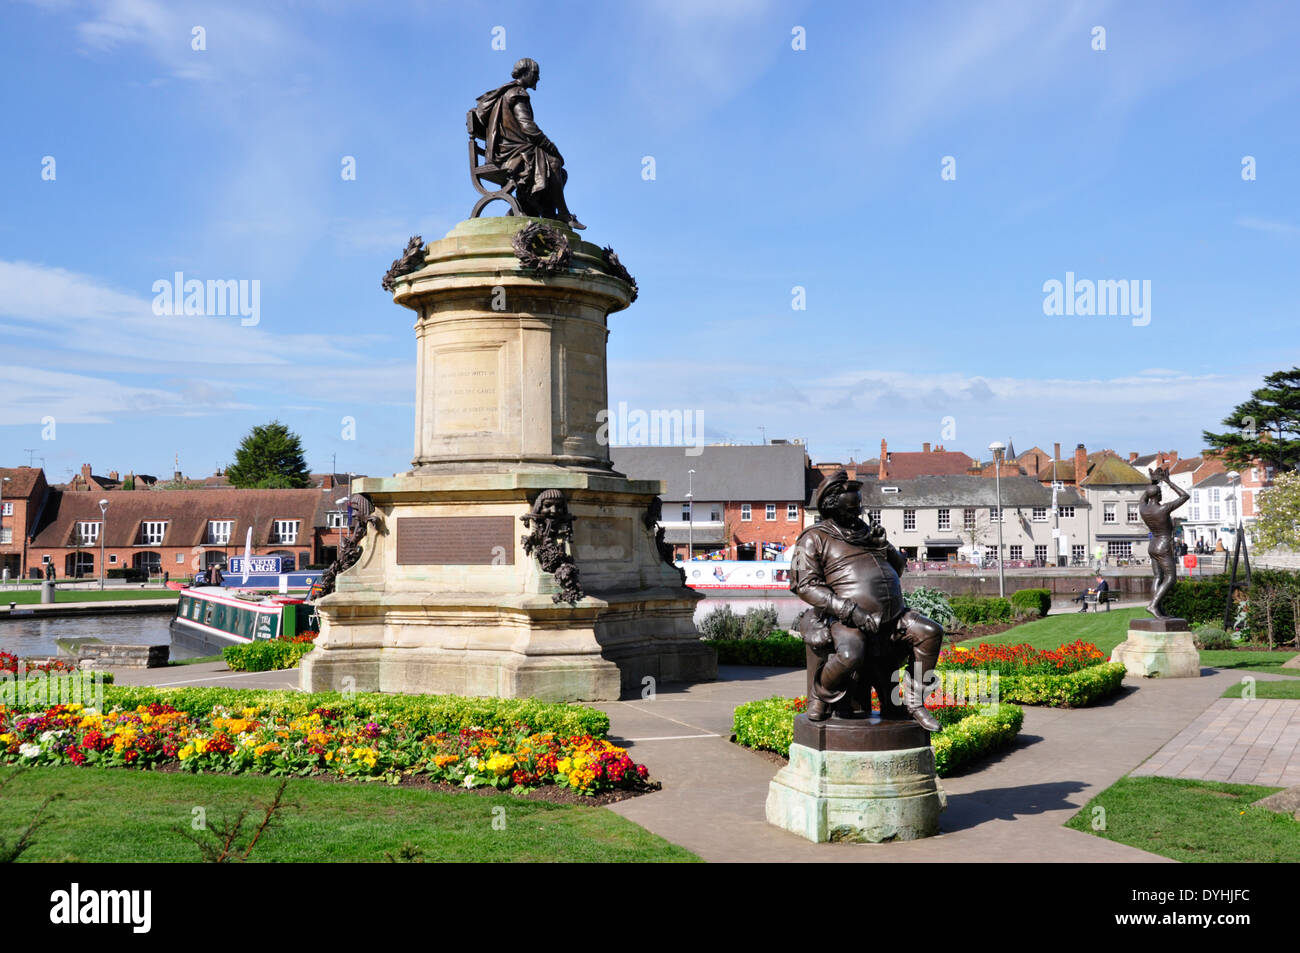 Stratford on Avon - Bancroft riverside gardens - elevated memorial statue William Shakespeare - sunlight - blue sky backdrop Stock Photo